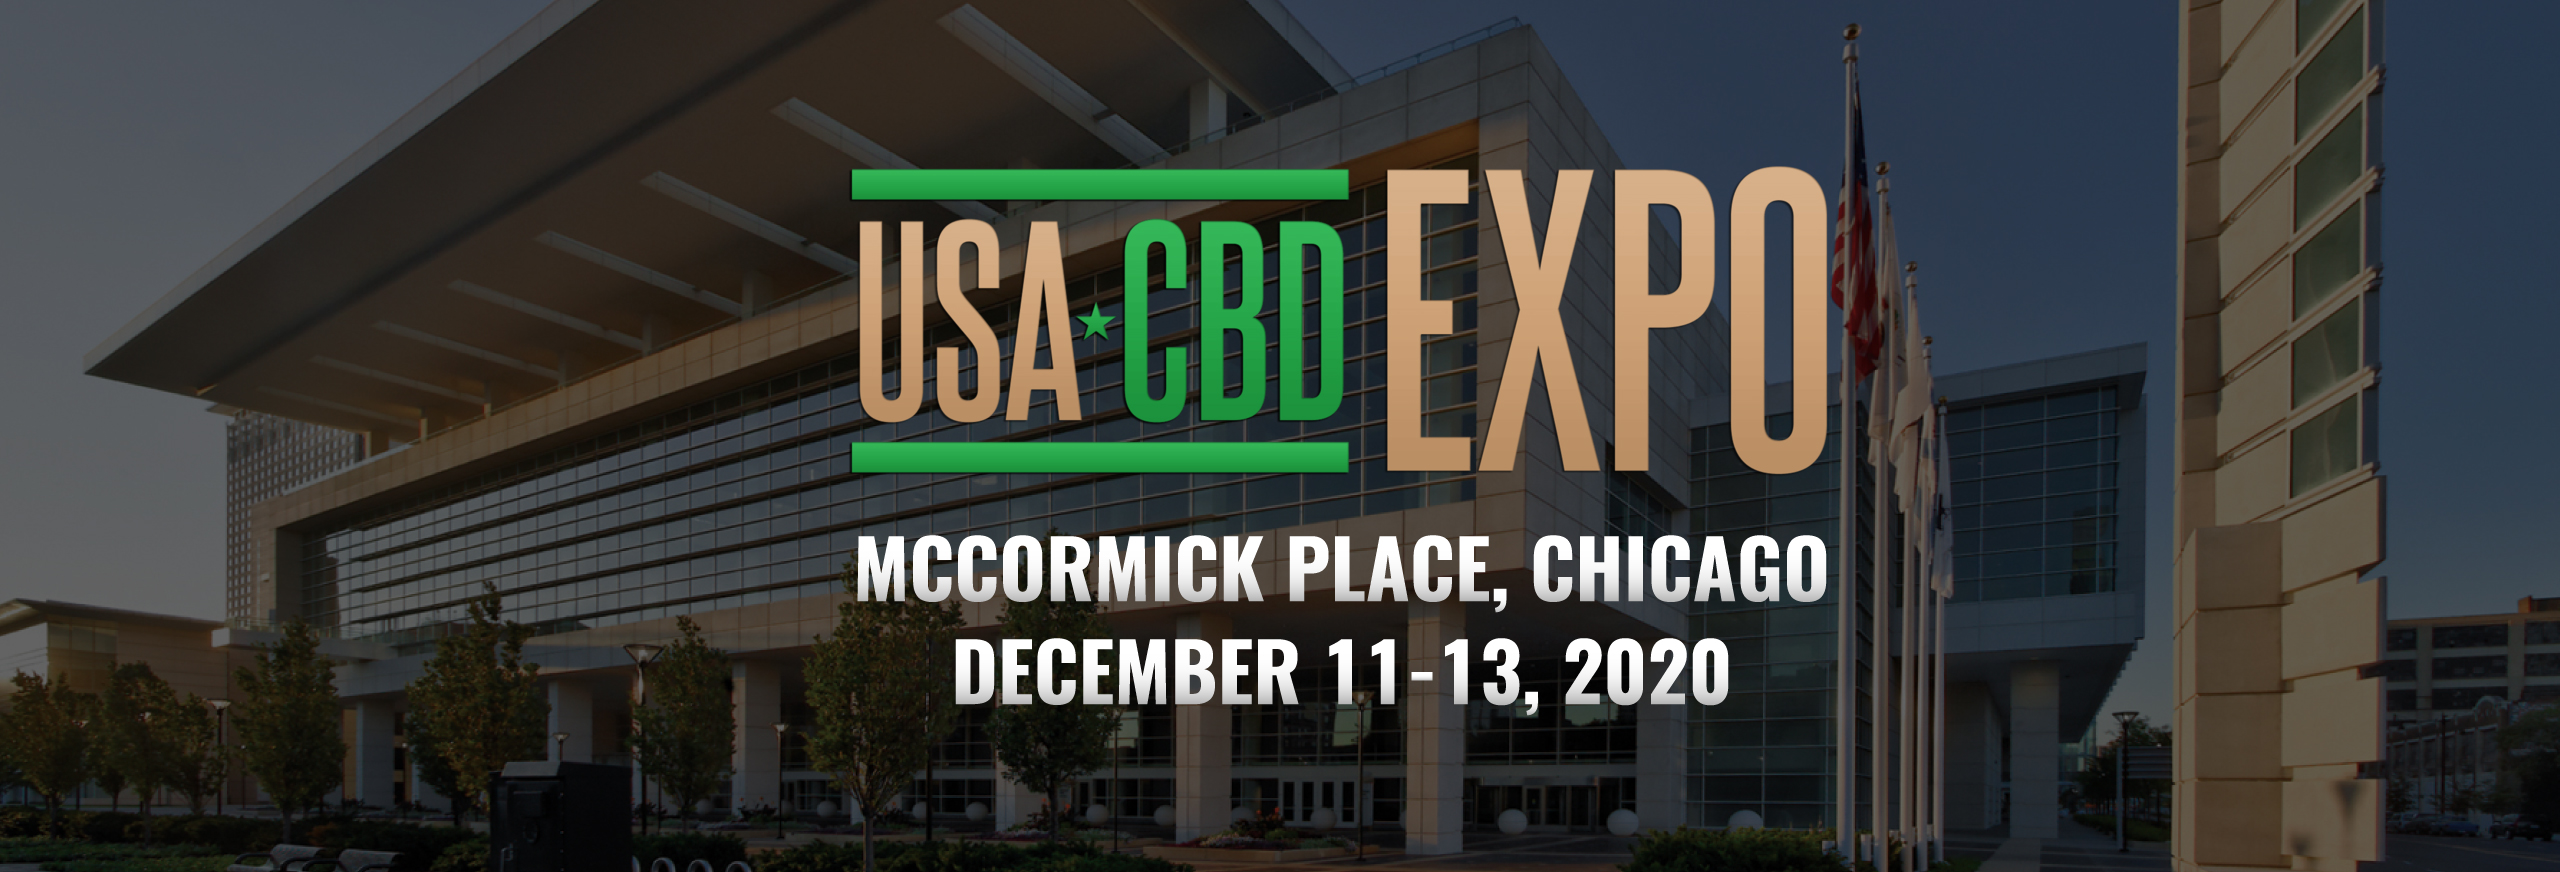 USA CBD Expo Chicago Vapouround